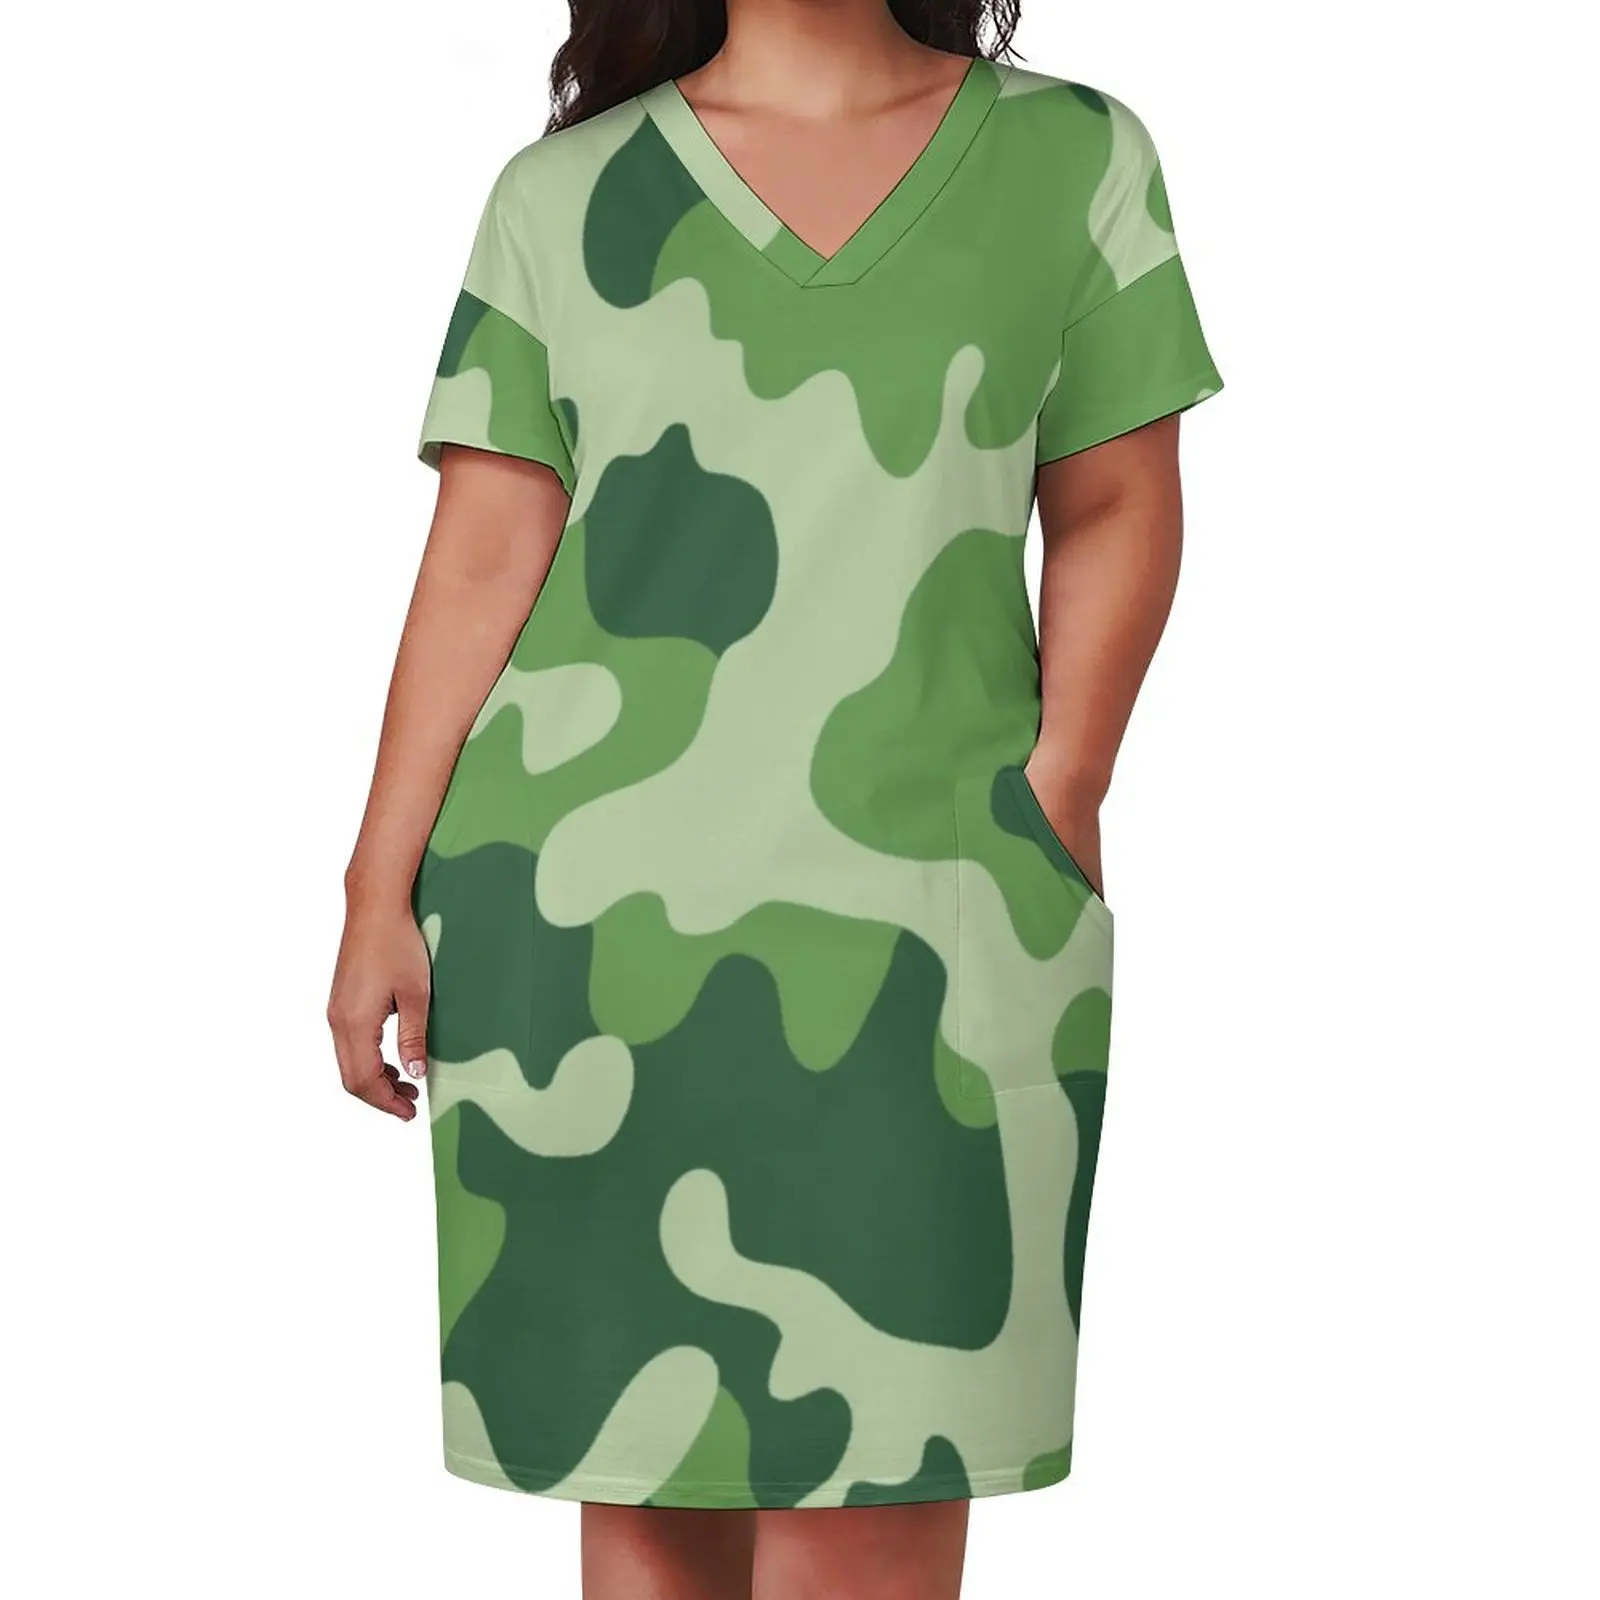 Green Camouflage Dress Plus Size Camo Military Print Street Fashion Casual Dress Lady Summer Short Sleeve Cute Dresses Gift Idea